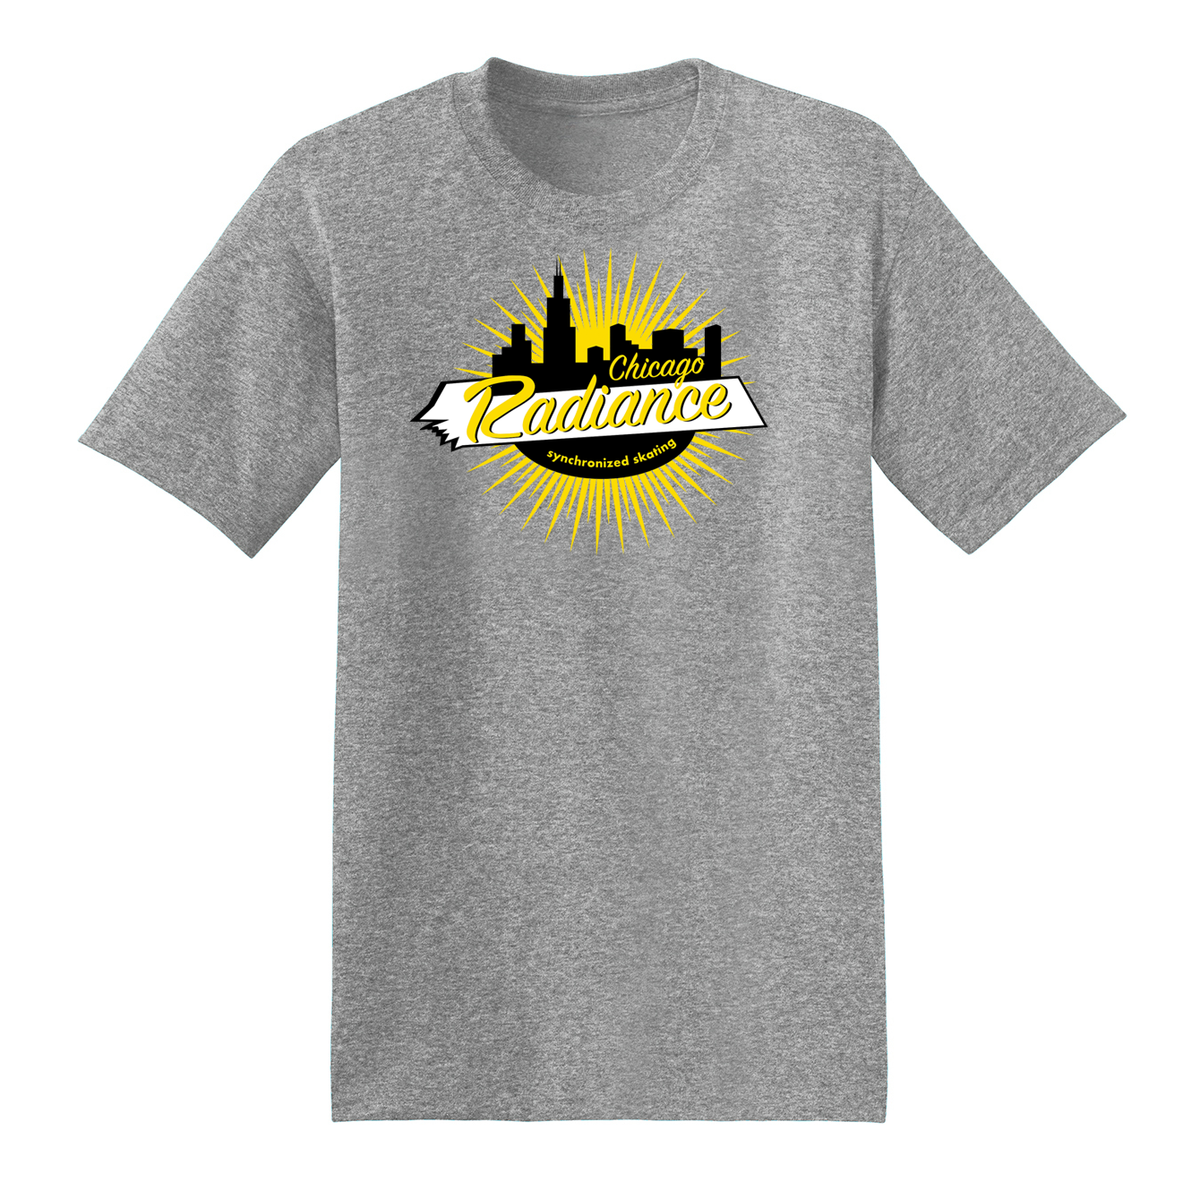 Chicago Radiance T-Shirt